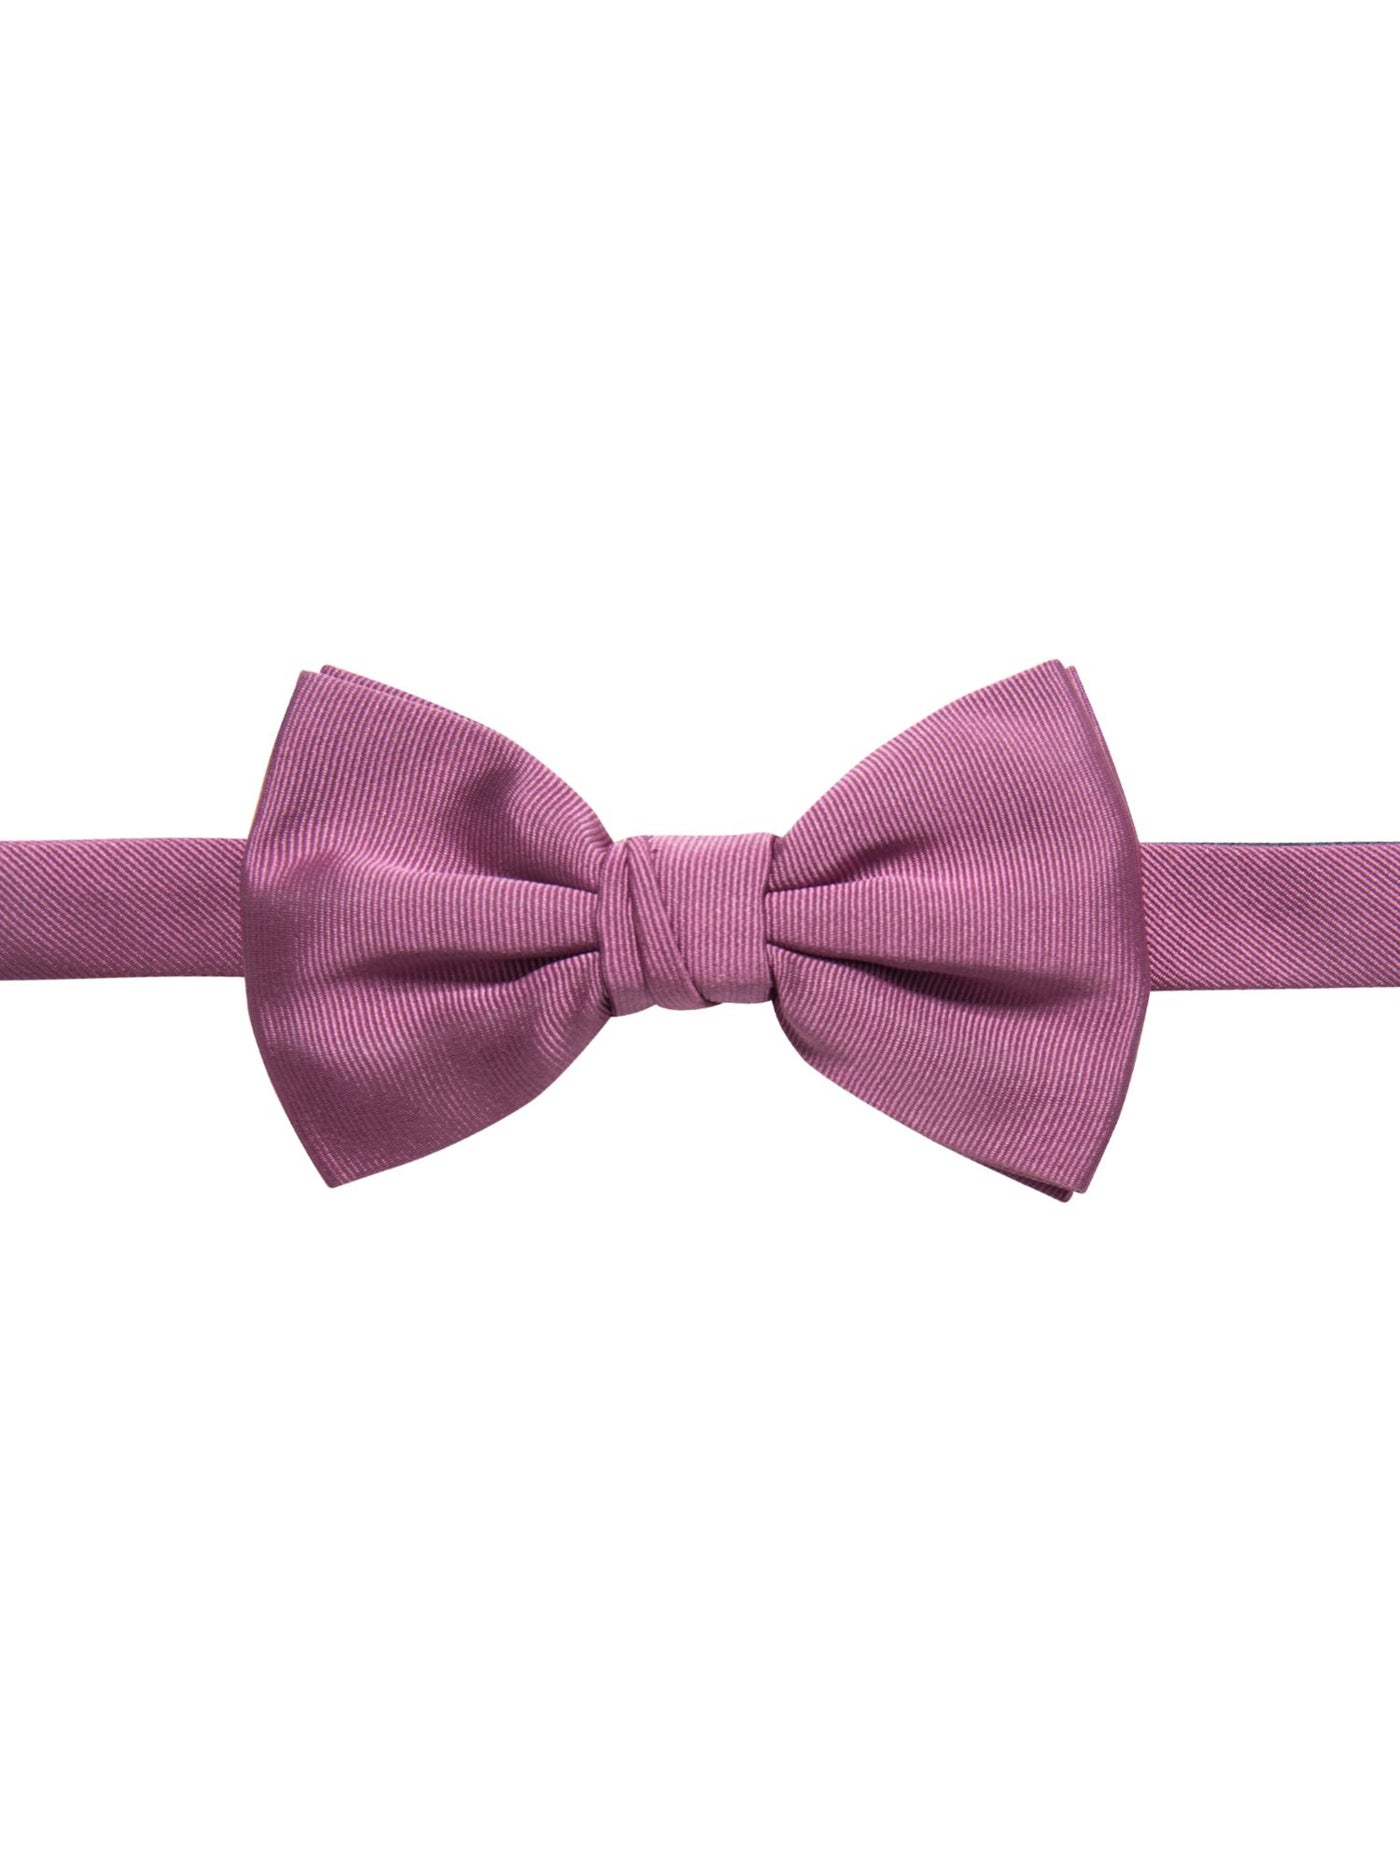 RYAN SEACREST Mens Purple Ribbed Pre-Tied Bow Tie